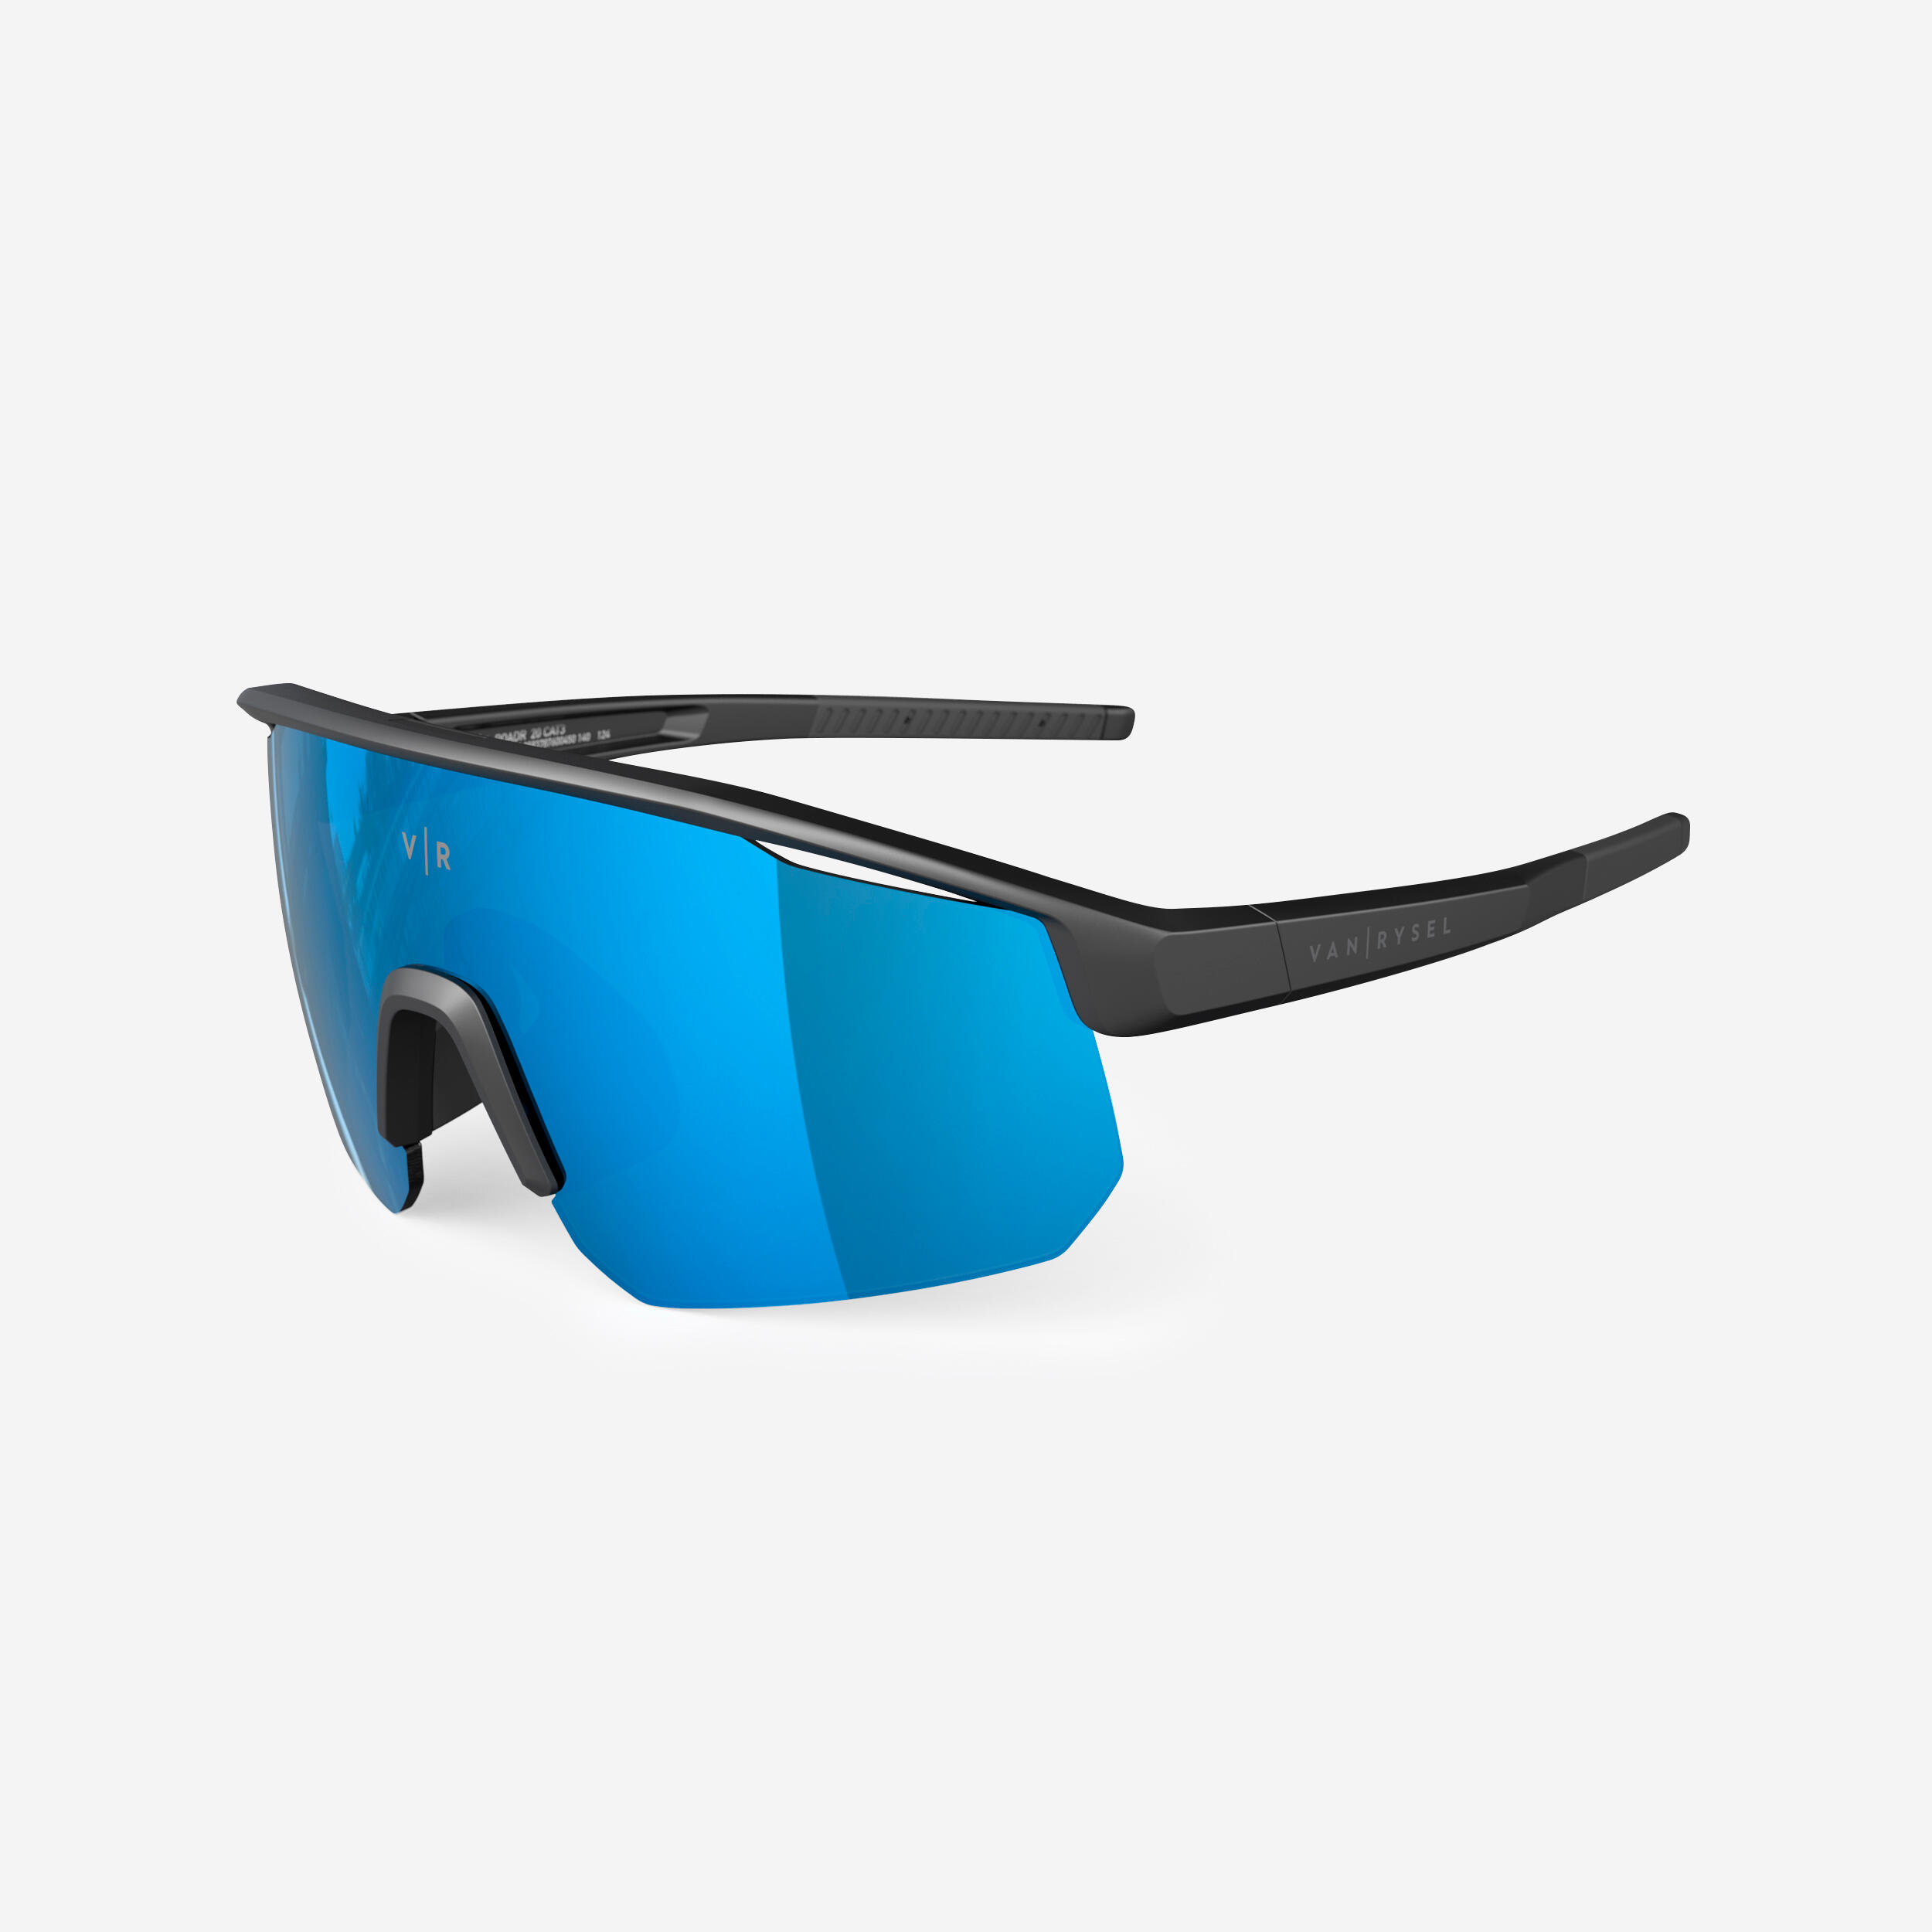 Van Rysel Adult Cycling Glasses Roadr 900 Category 3 - Black/Blue